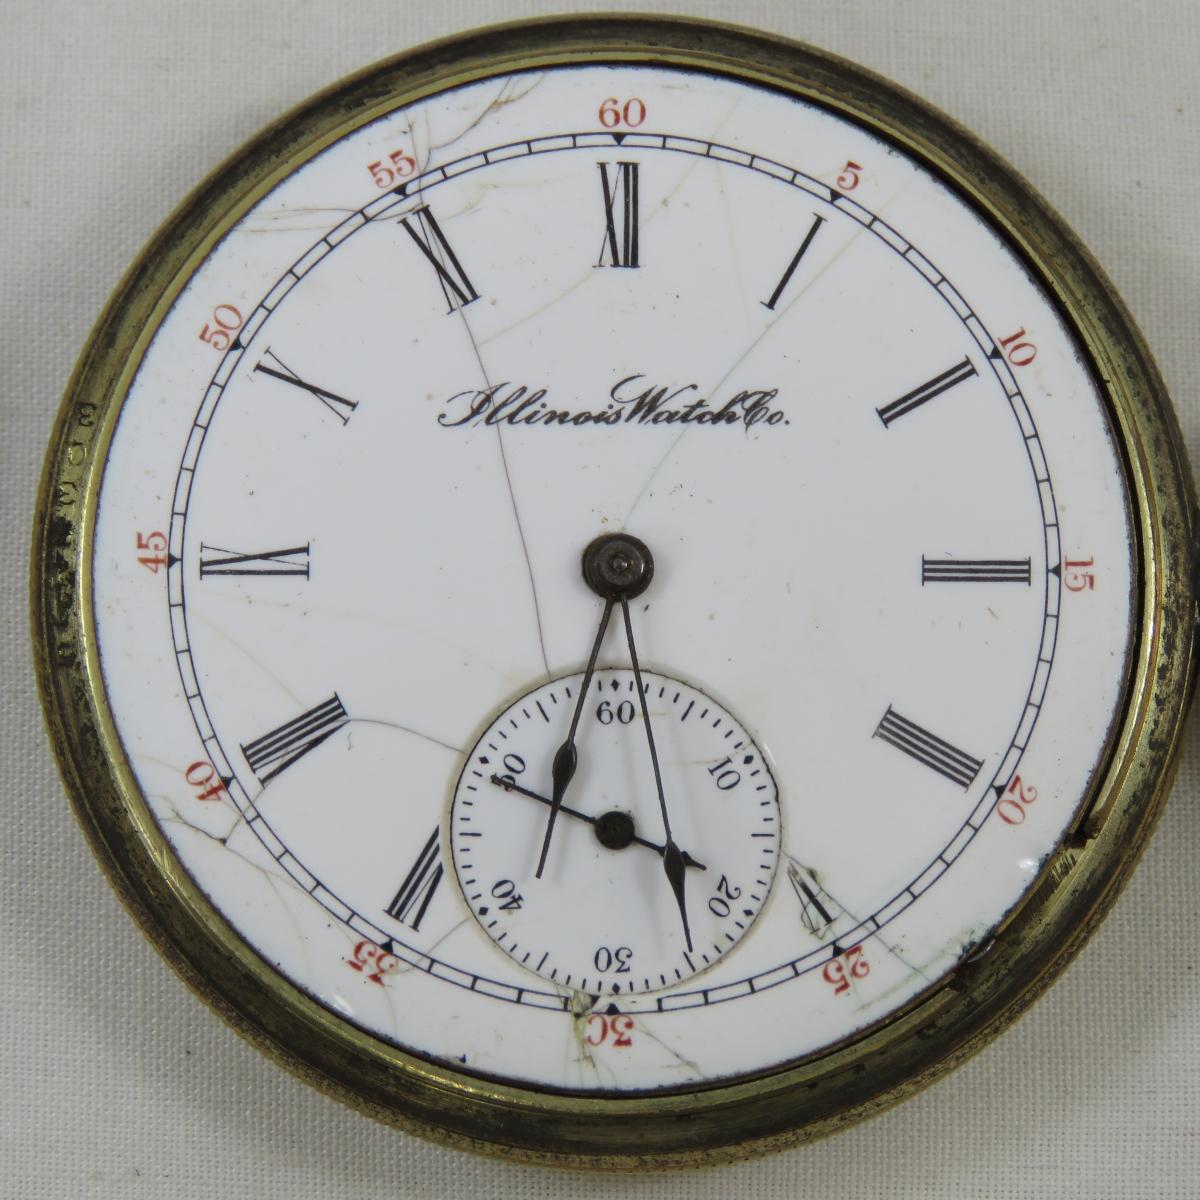 1896 Illinois Watch Co Grade 171 Pocket Watch